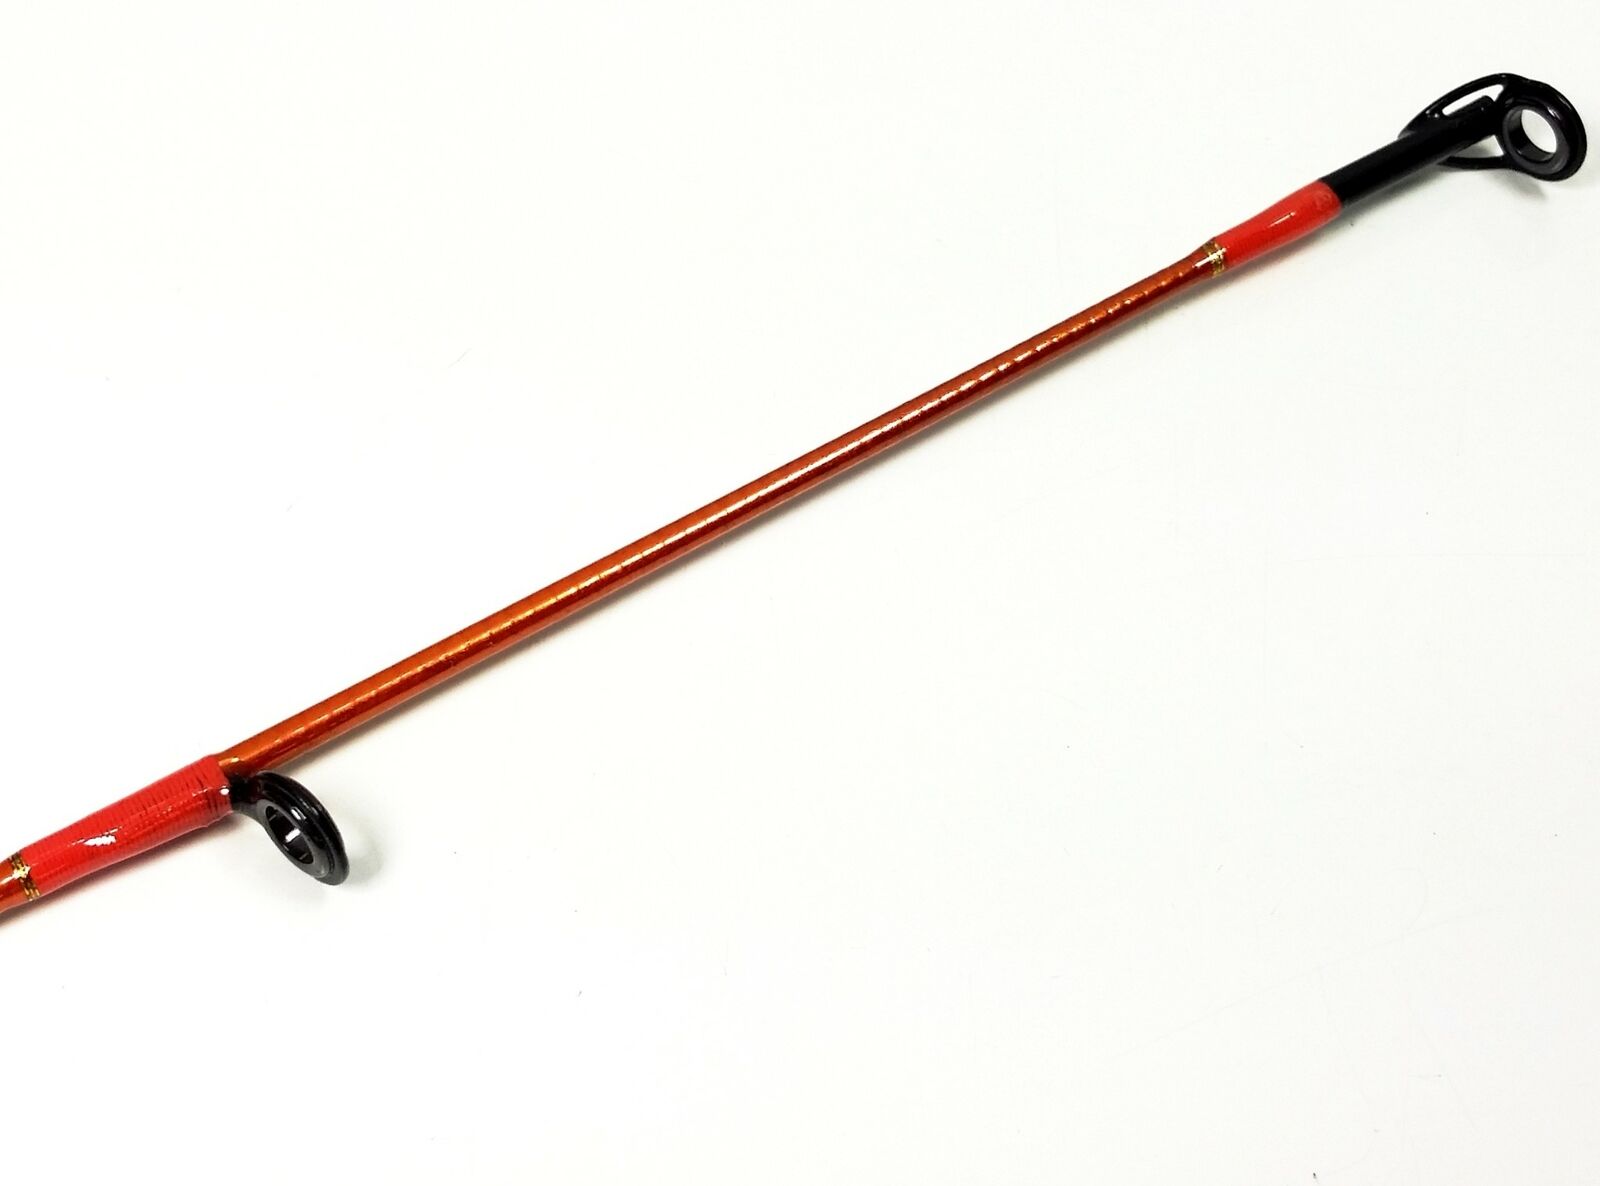 carrott stick fishing rod